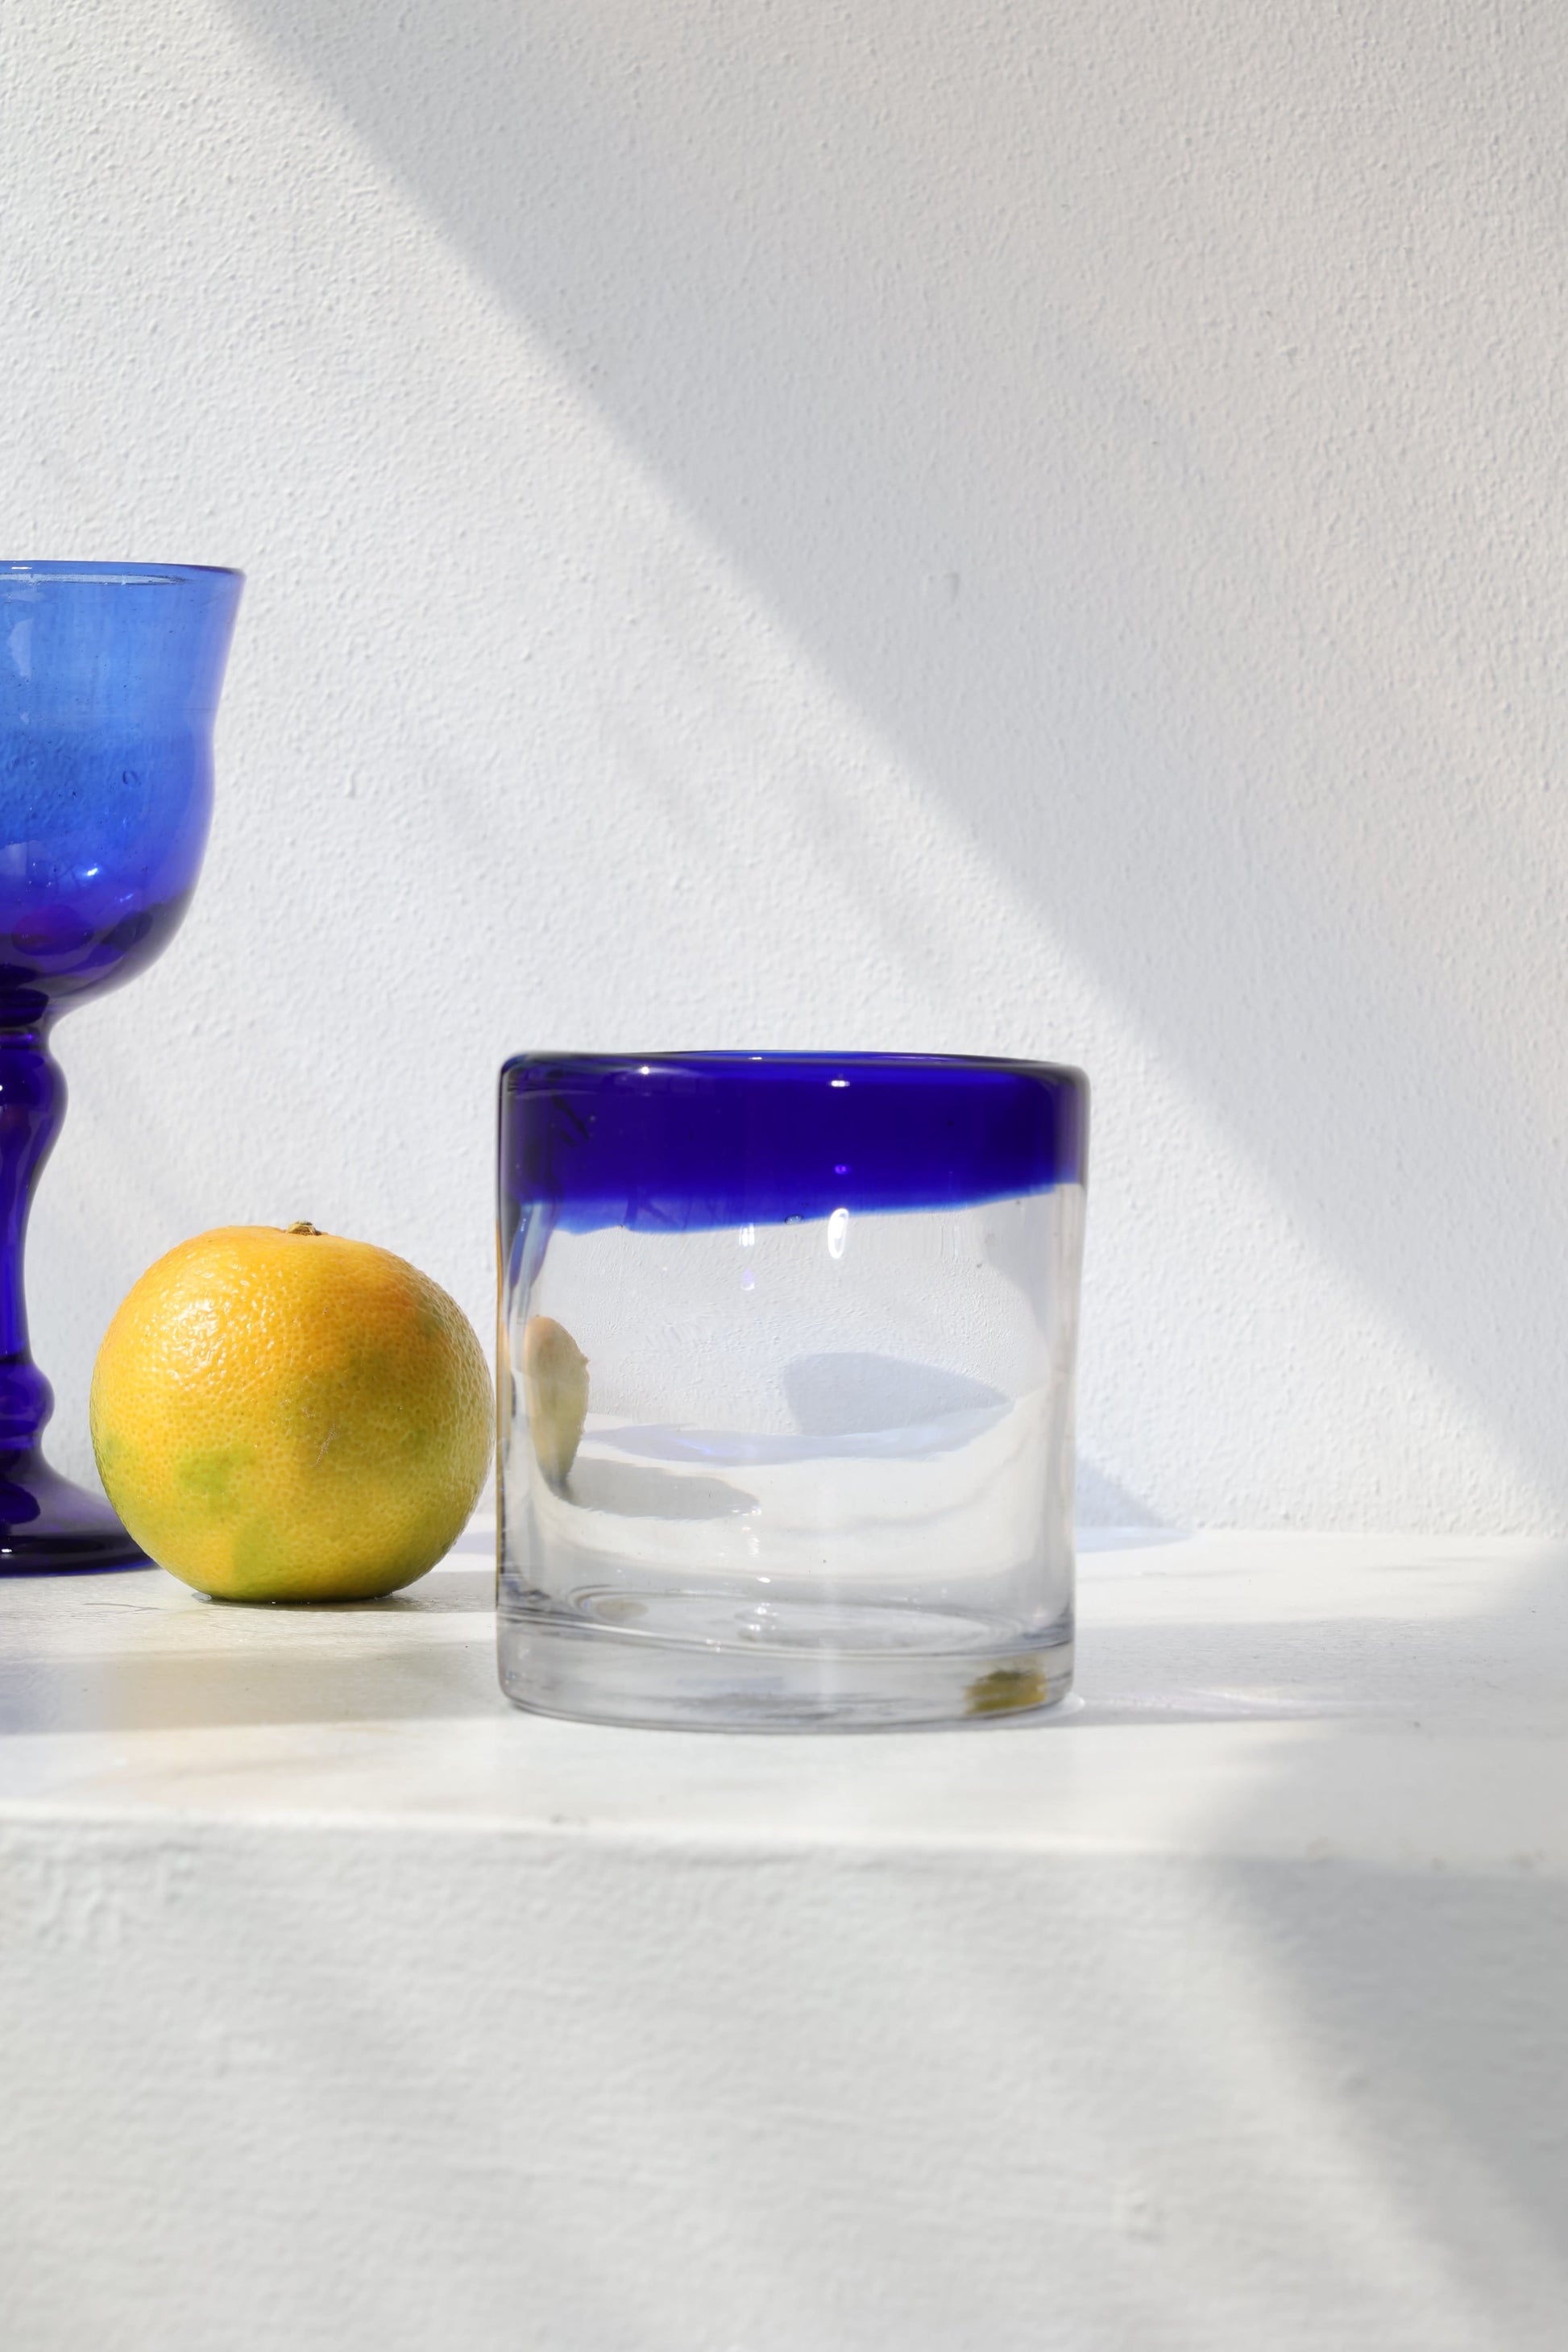 hebron-glass-palestine-blue-rim